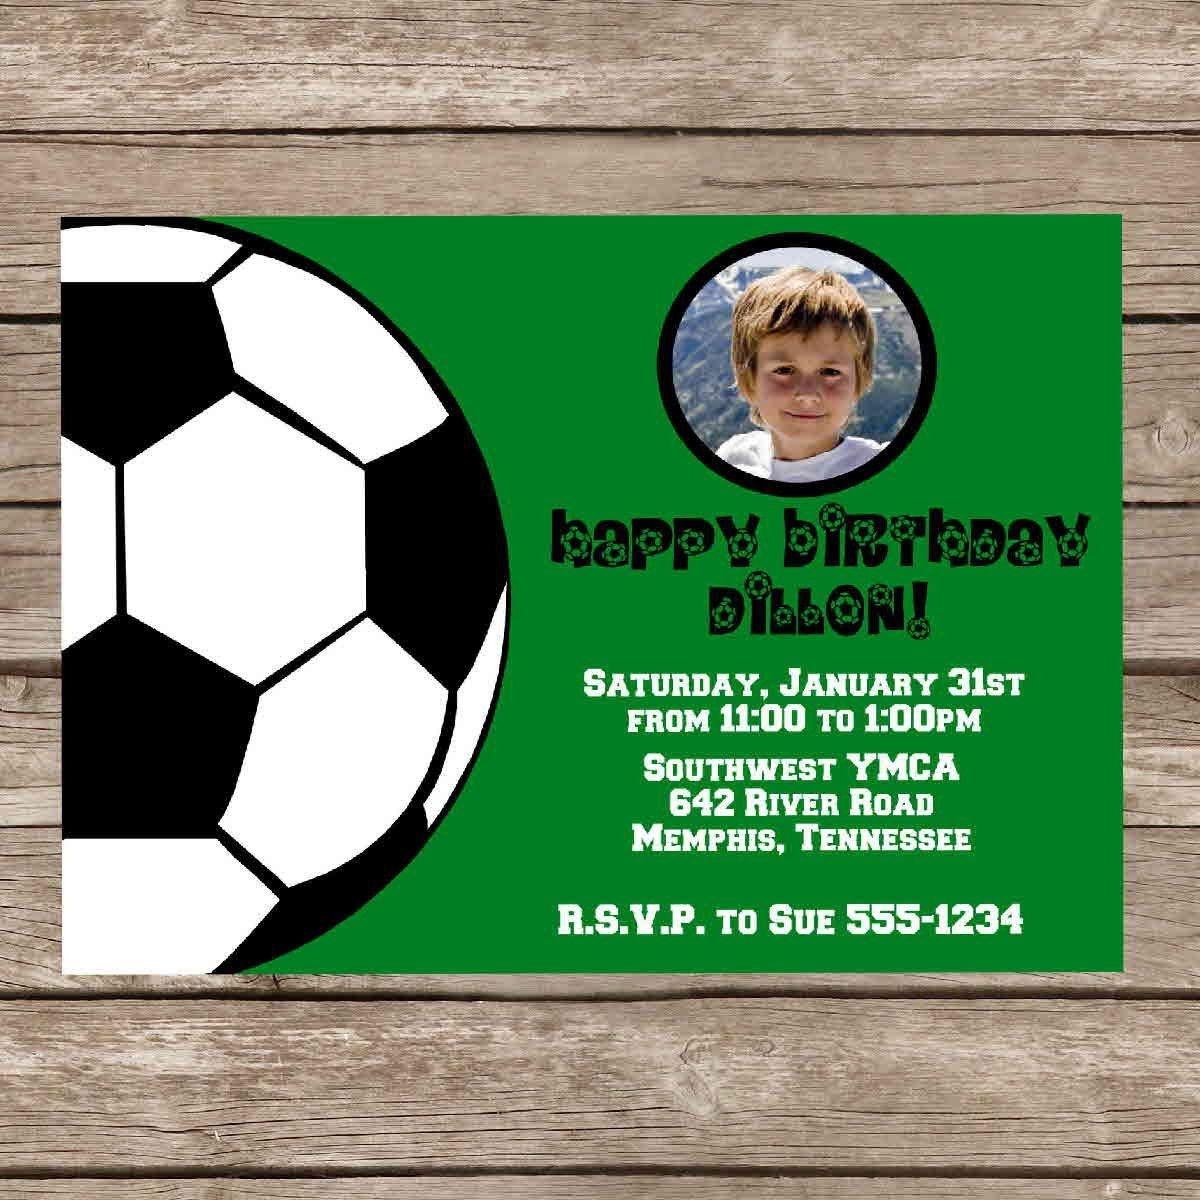 Printable Easter Birthday Party Invitations. Free Printable Birthday - Free Printable Soccer Birthday Invitations